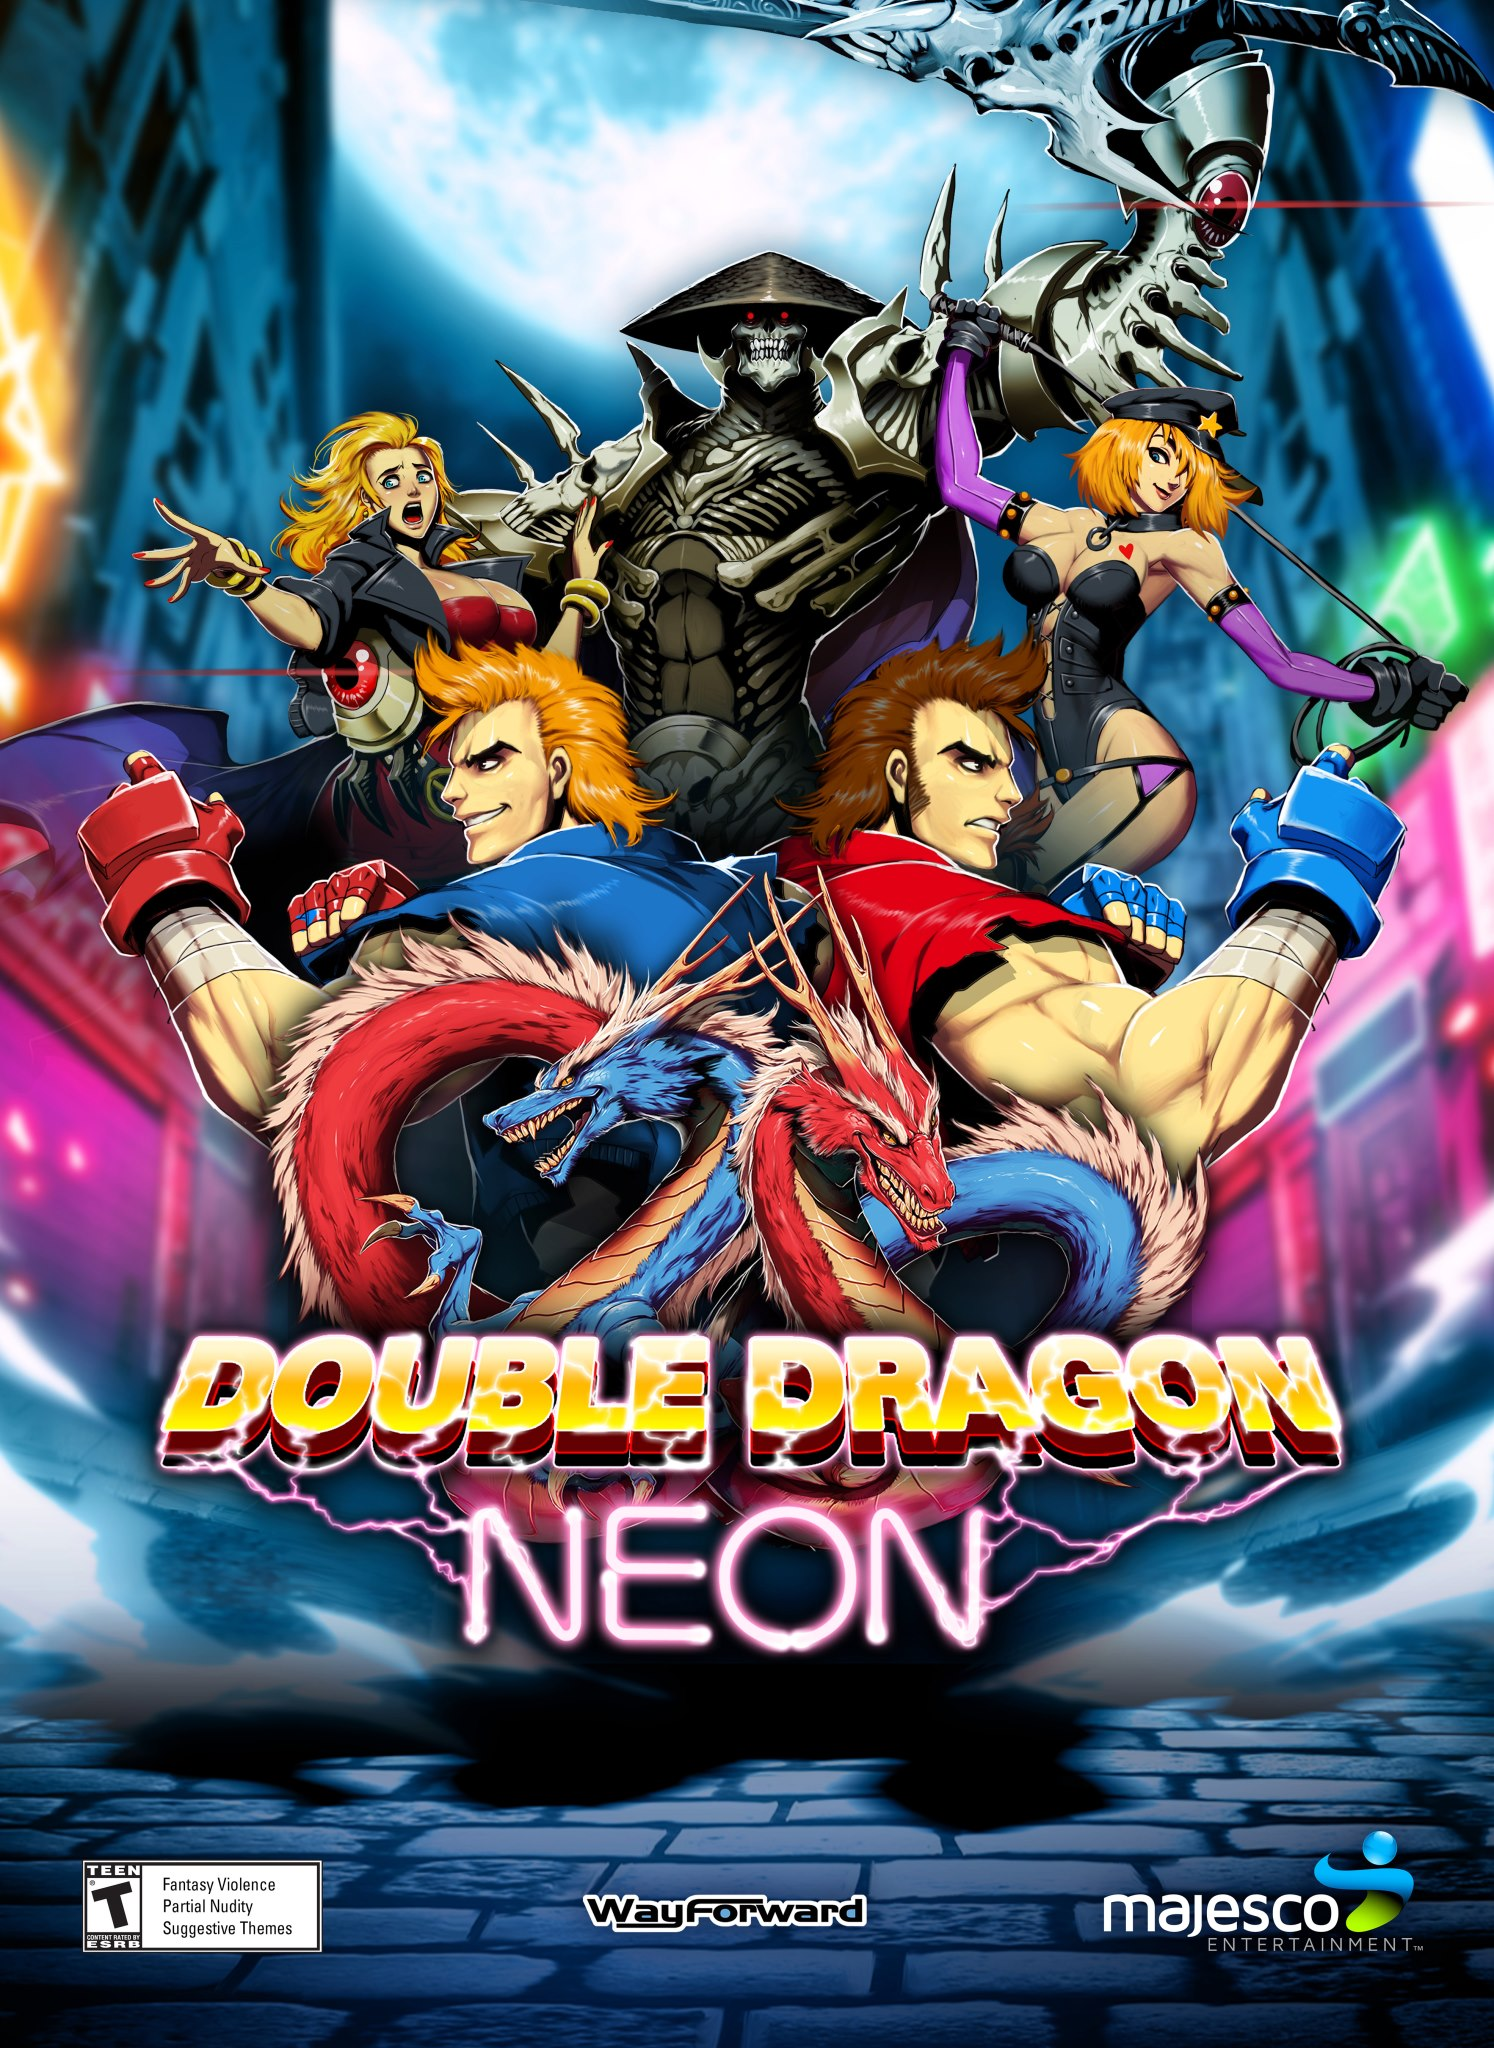 Double Dragon 4 (PS4) Mike & Ryan 